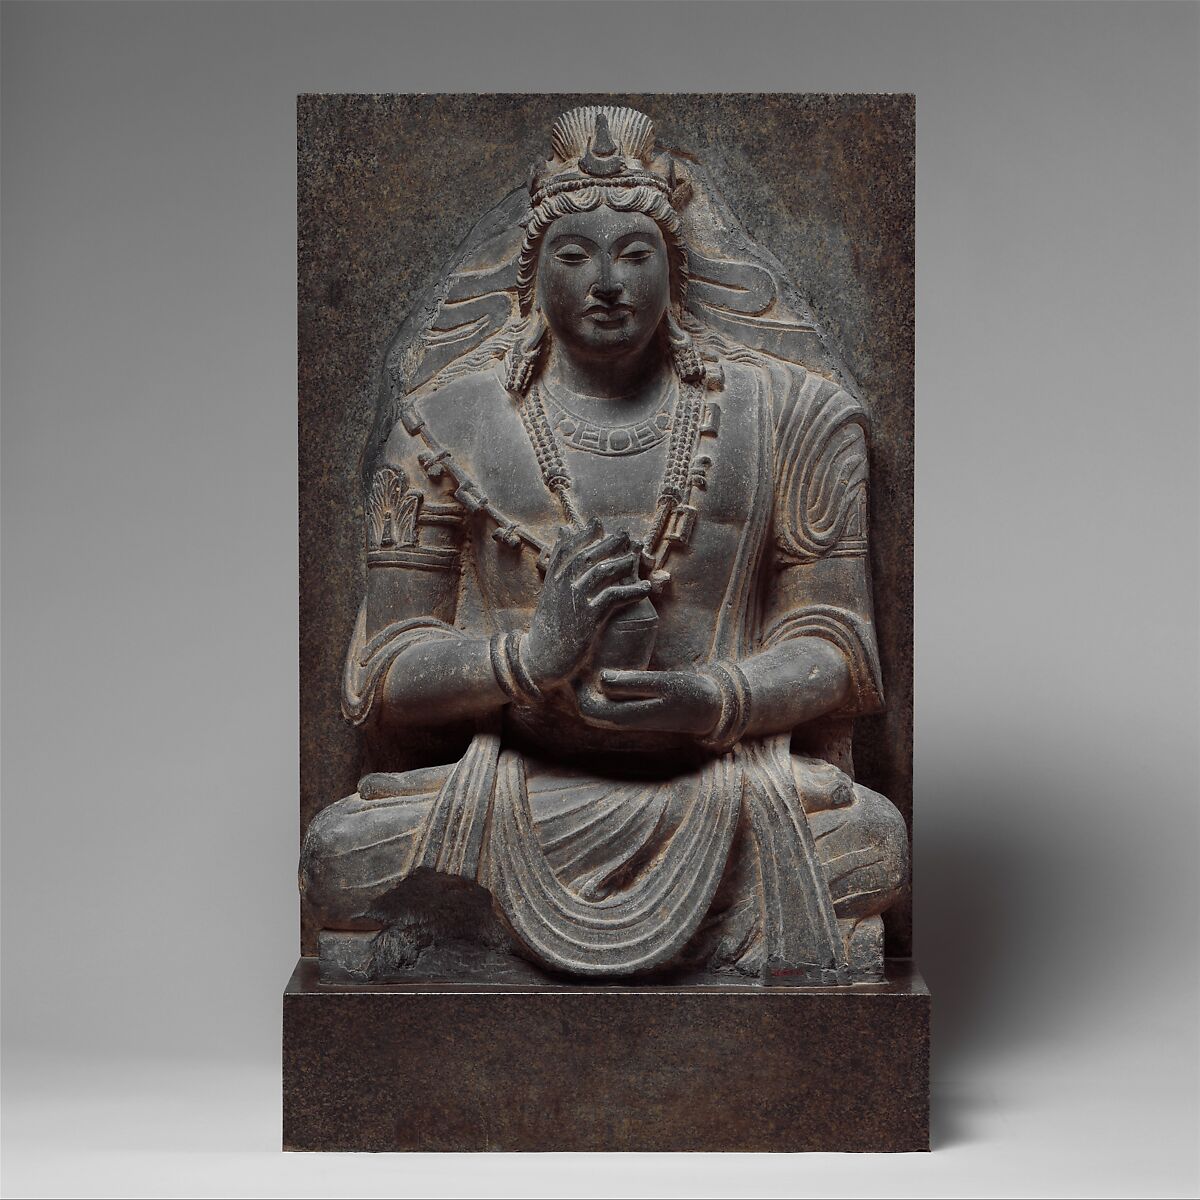 Seated Bodhisattva Maitreya (Buddha of the Future), Schist, Afghanistan (found near Kabul) 